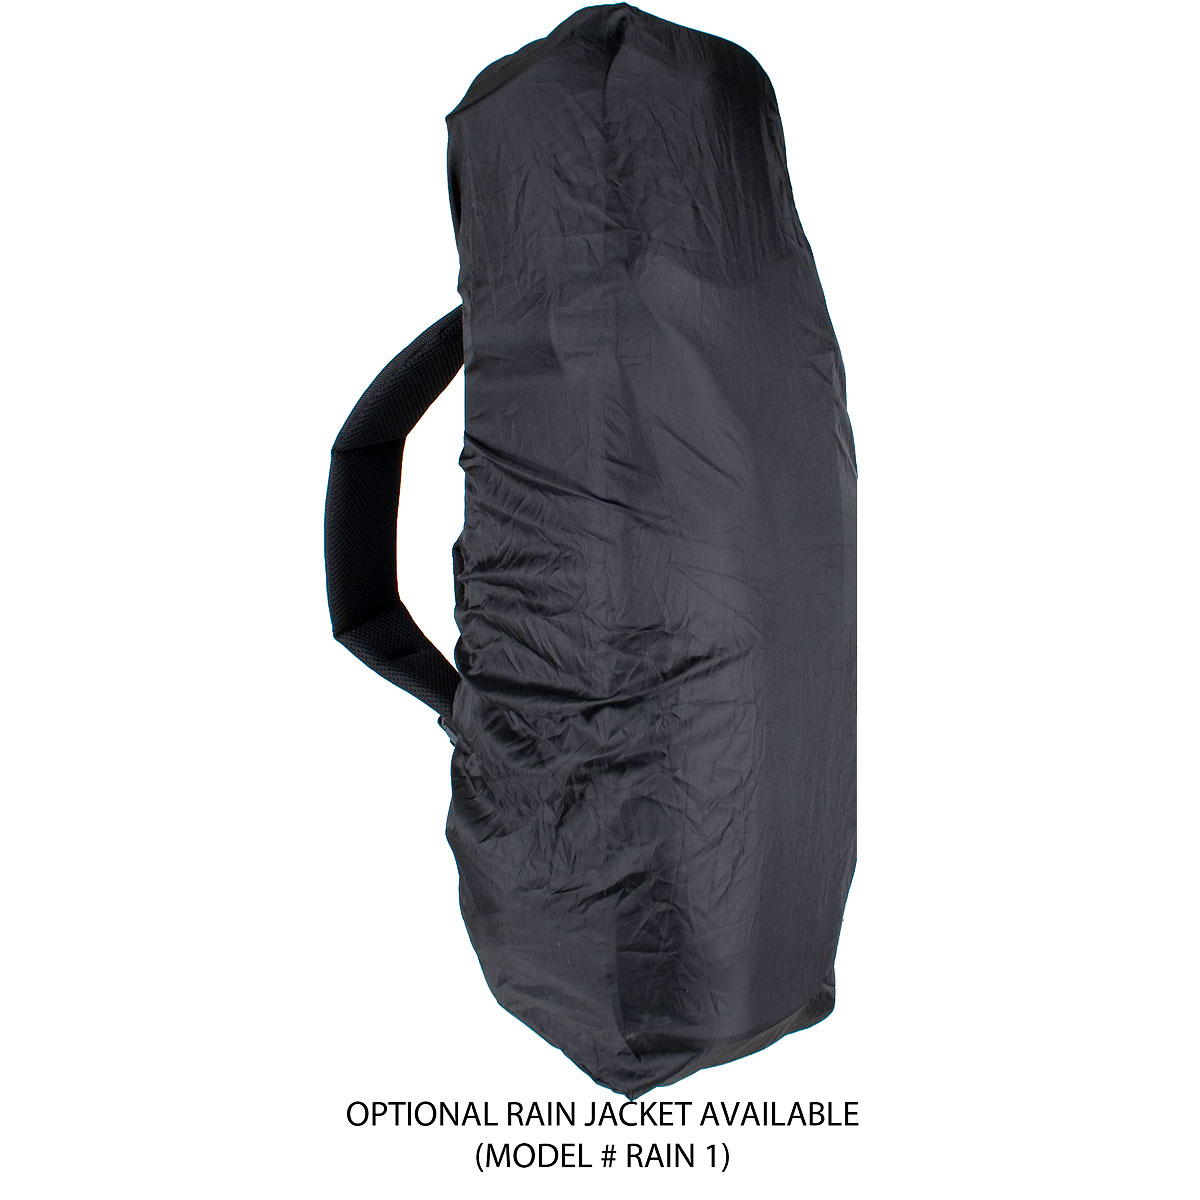 Protec Rain1 - Rain Jacket for Small Cases